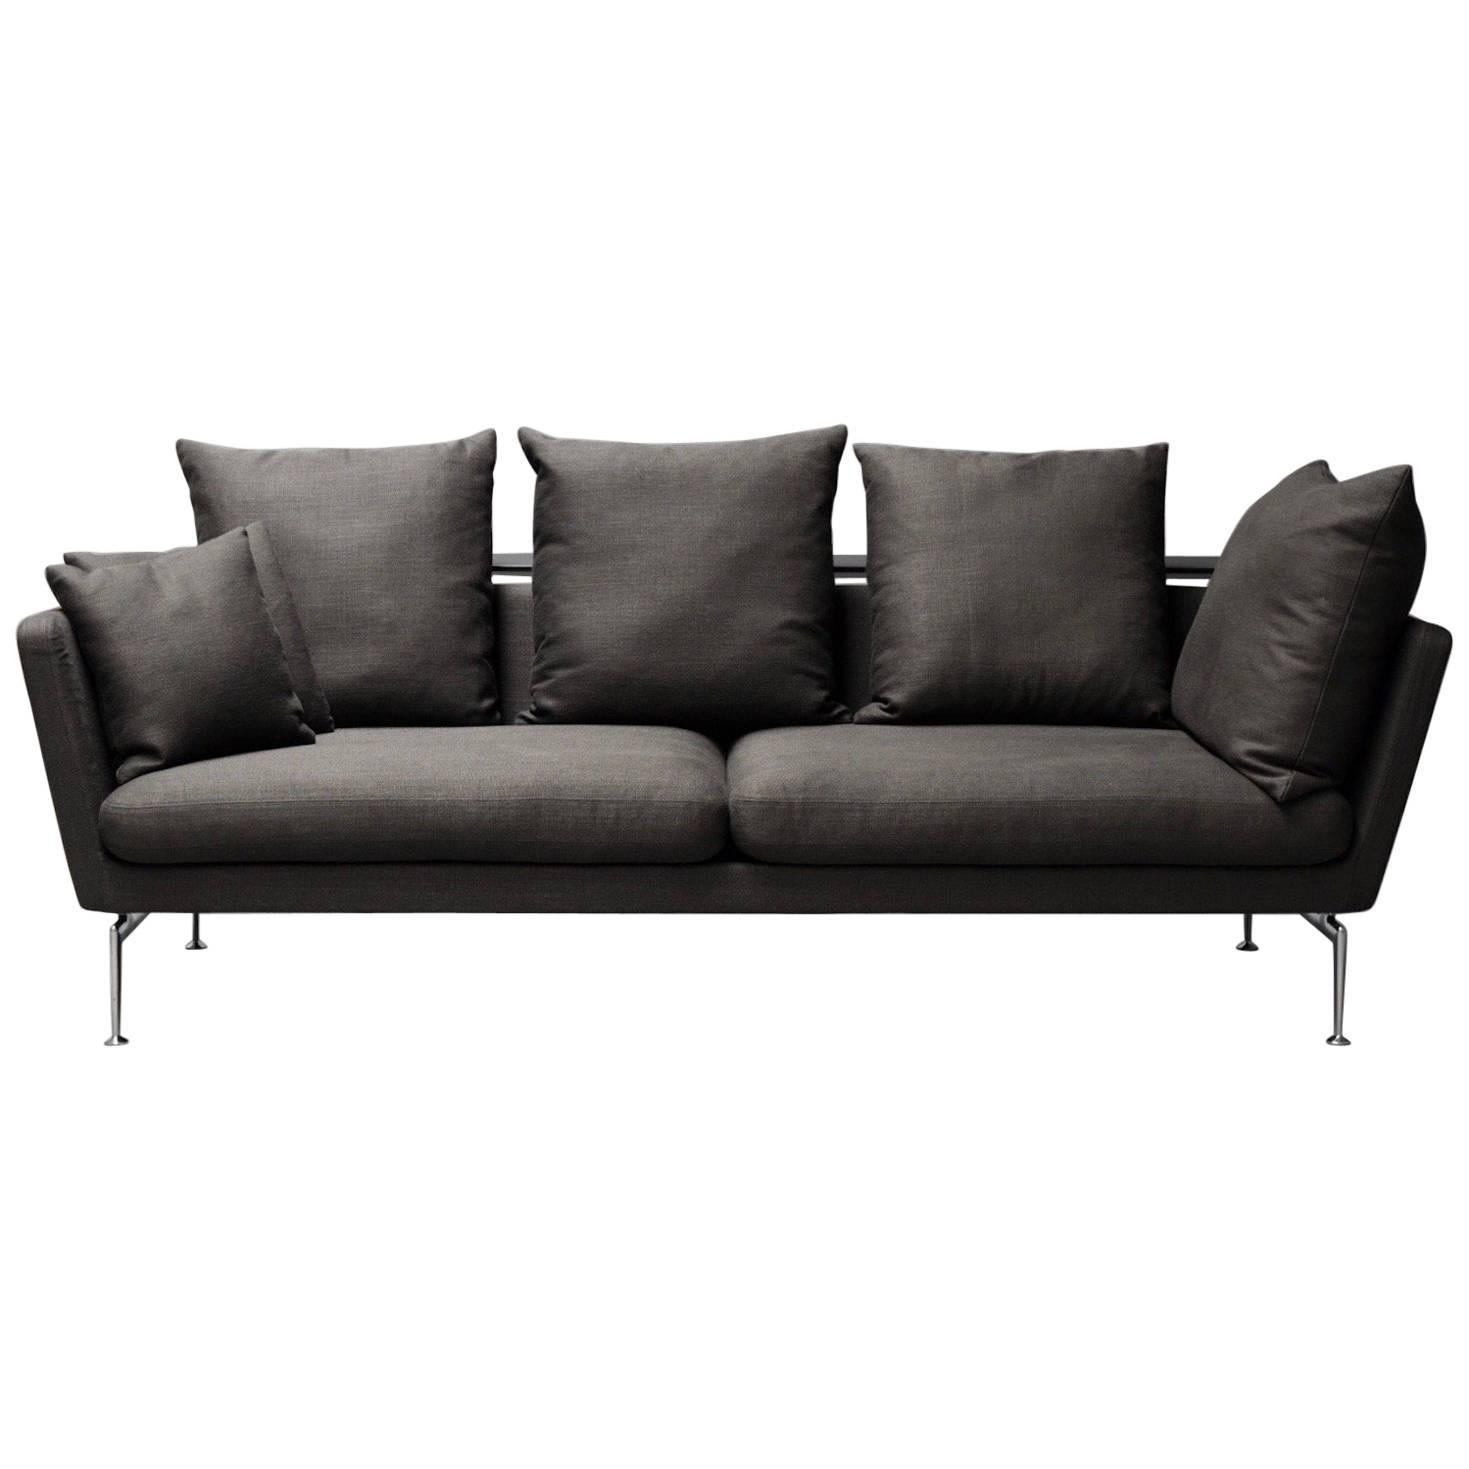 Three-Seat Lounge Sofa, Model Suita by Antonio Citterio for Vitra